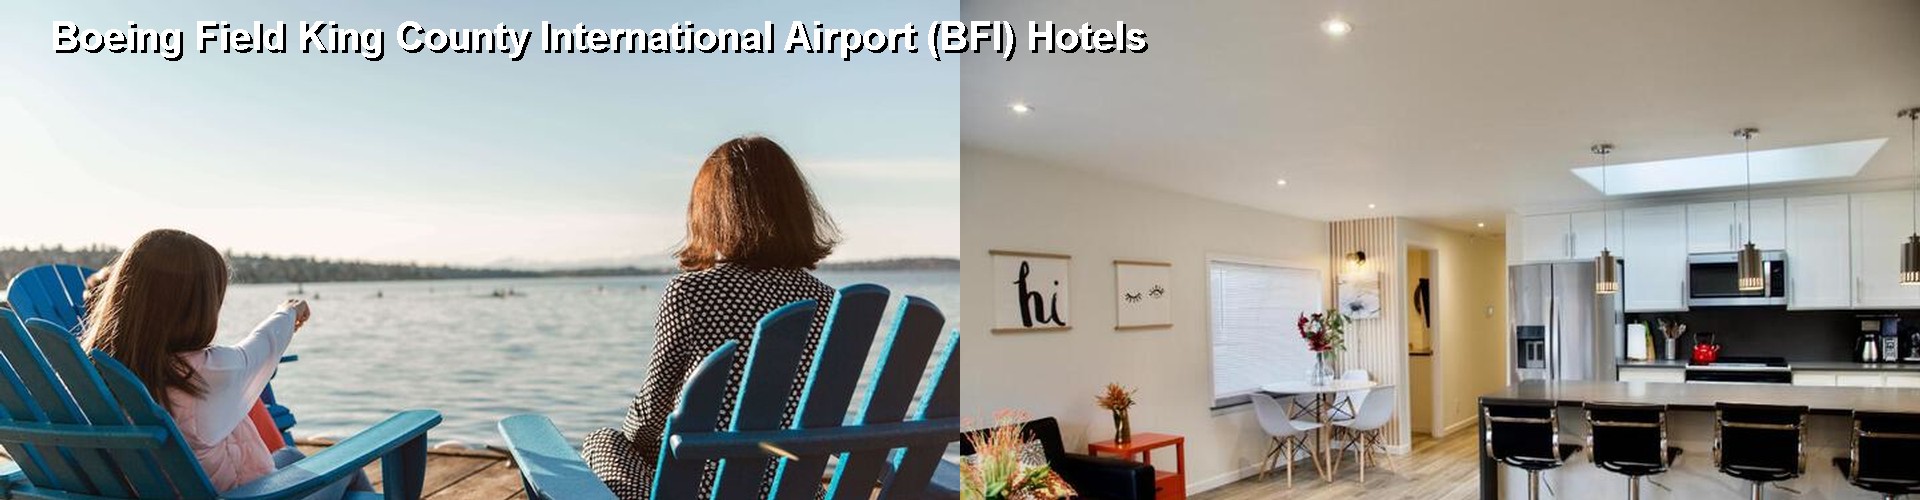 3 Best Hotels near Boeing Field King County International Airport (BFI)